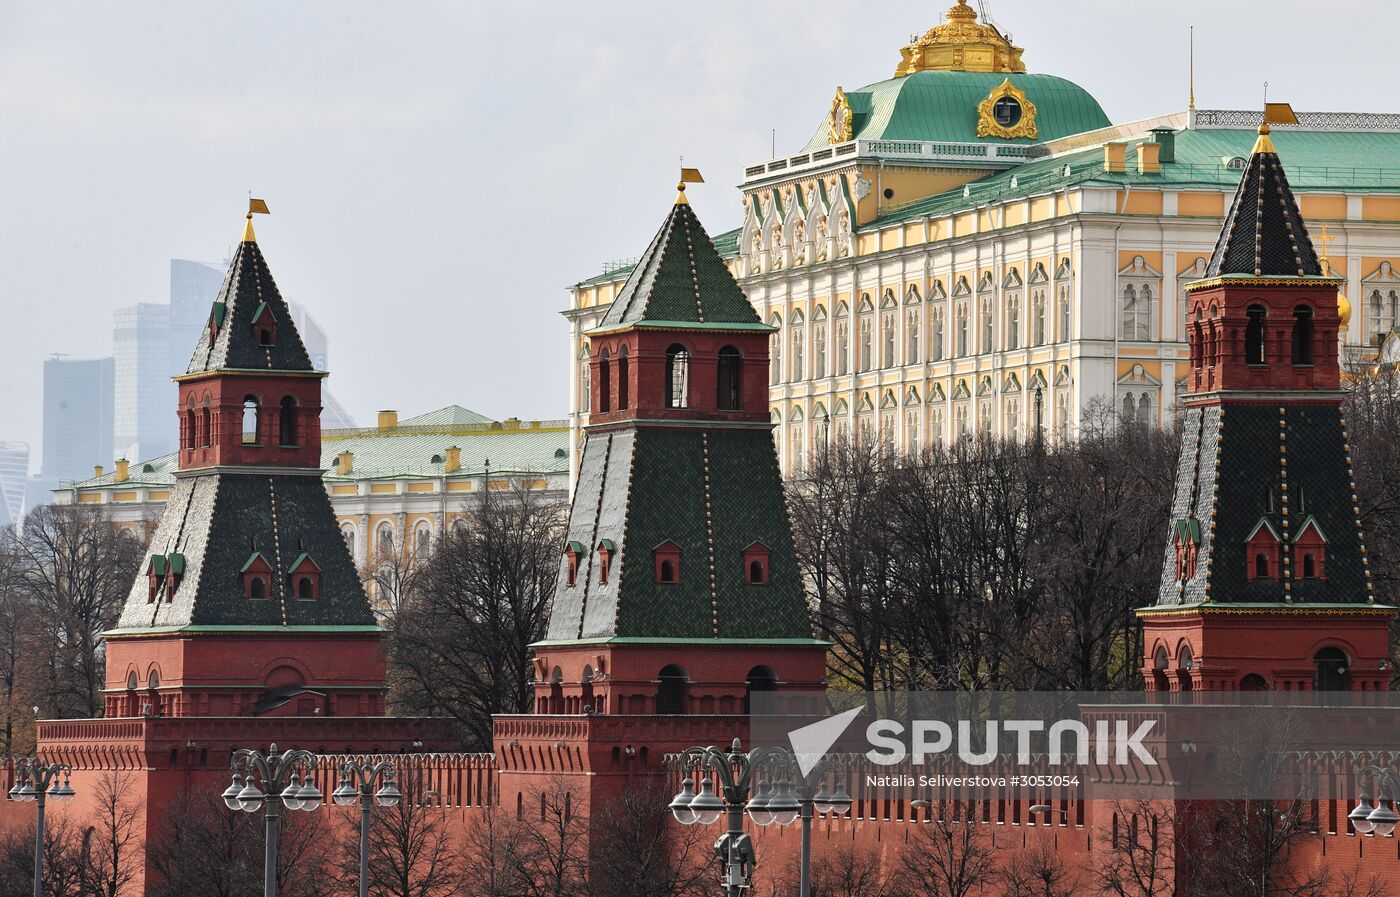 Moscow Kremlin